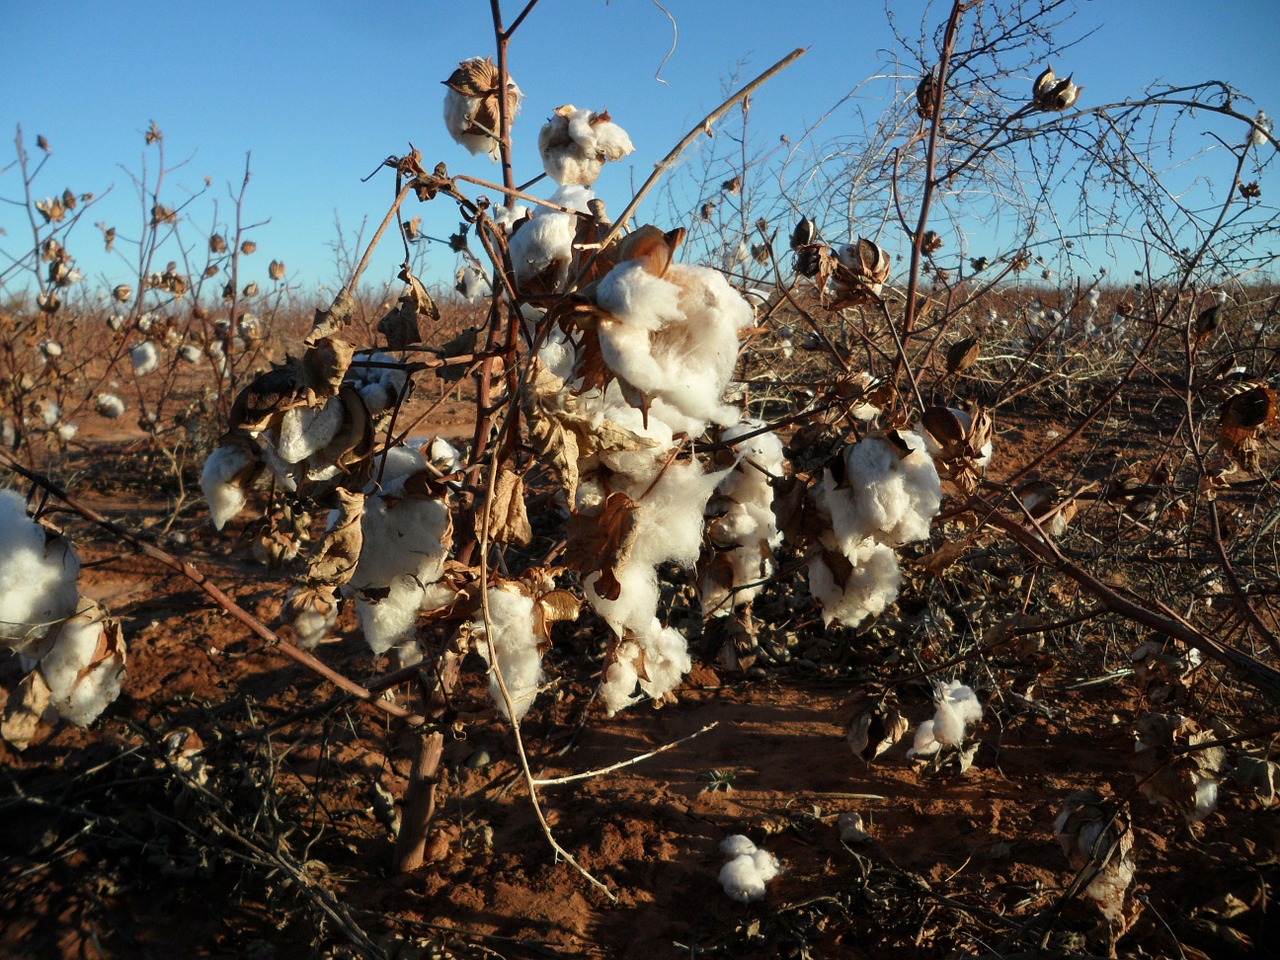 Buttermilk-Based Bioformulation Helps In Cotton Disease Control